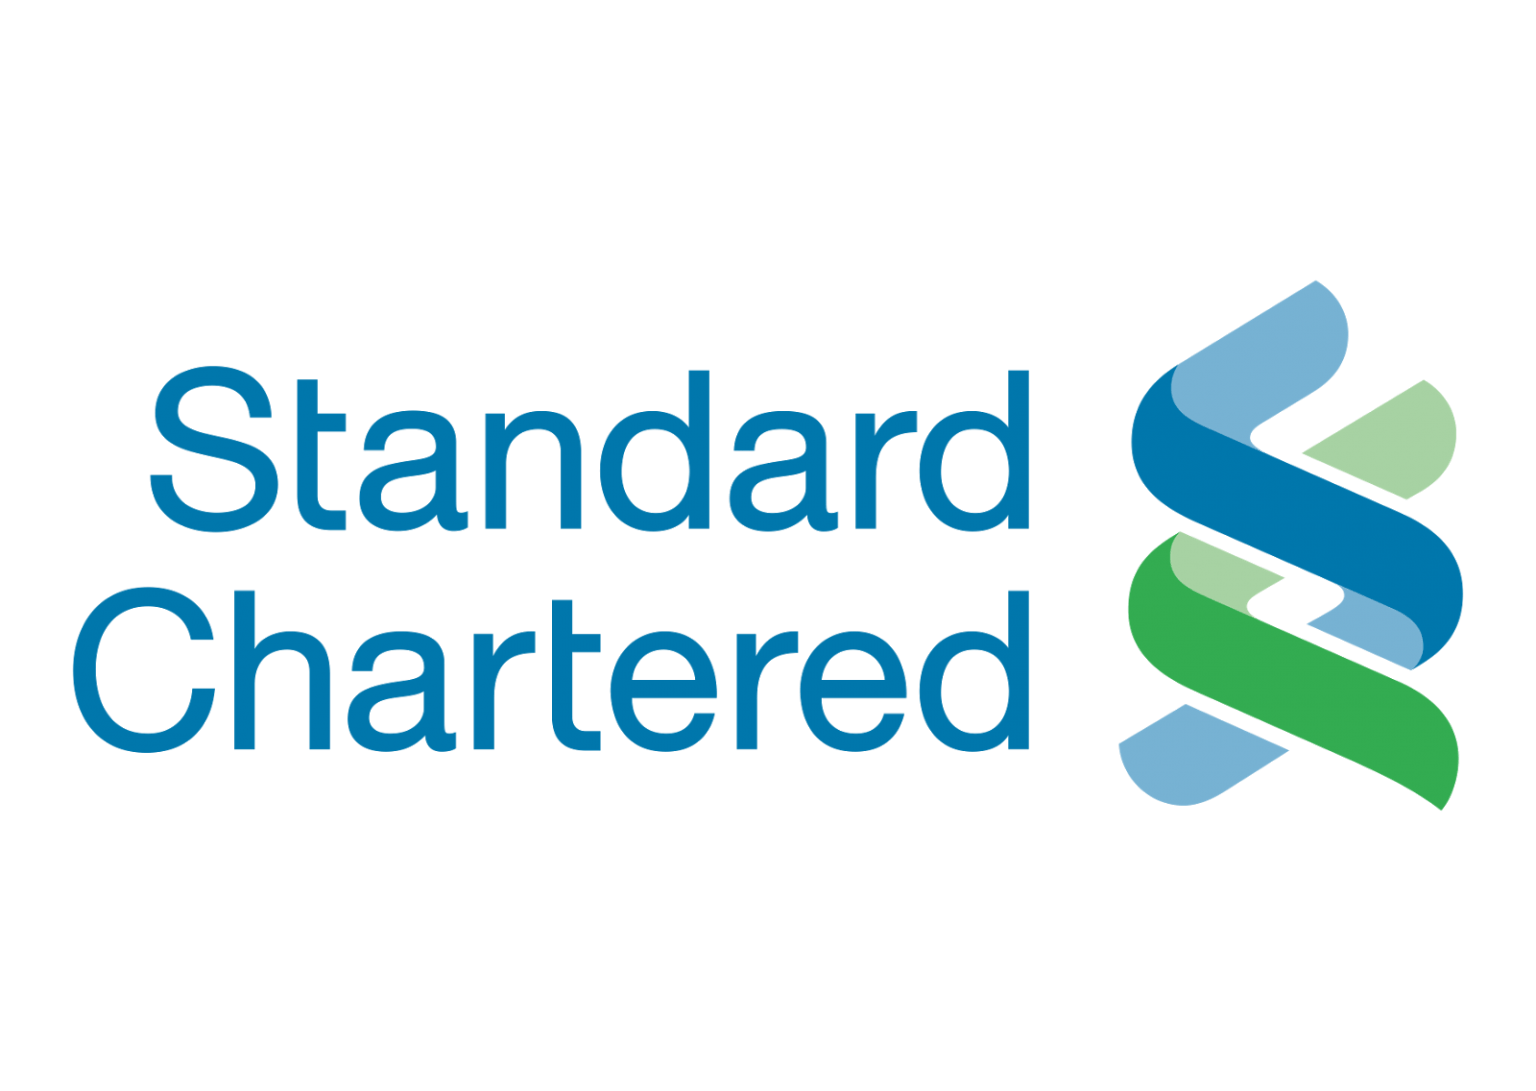 StandardCharteredlogo